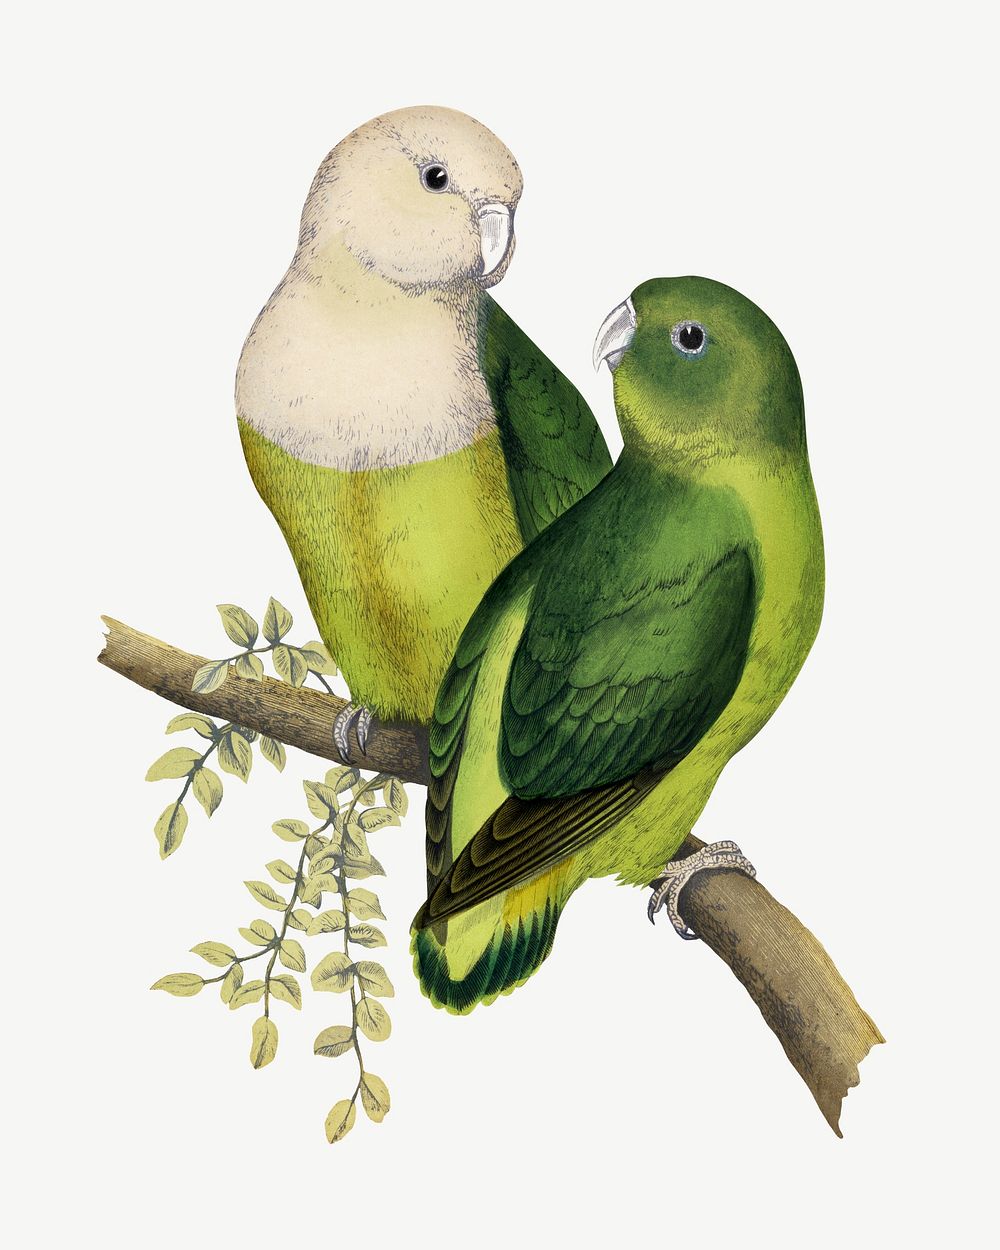 Madagascar love-bird, vintage bird illustration psd. Remixed by rawpixel.